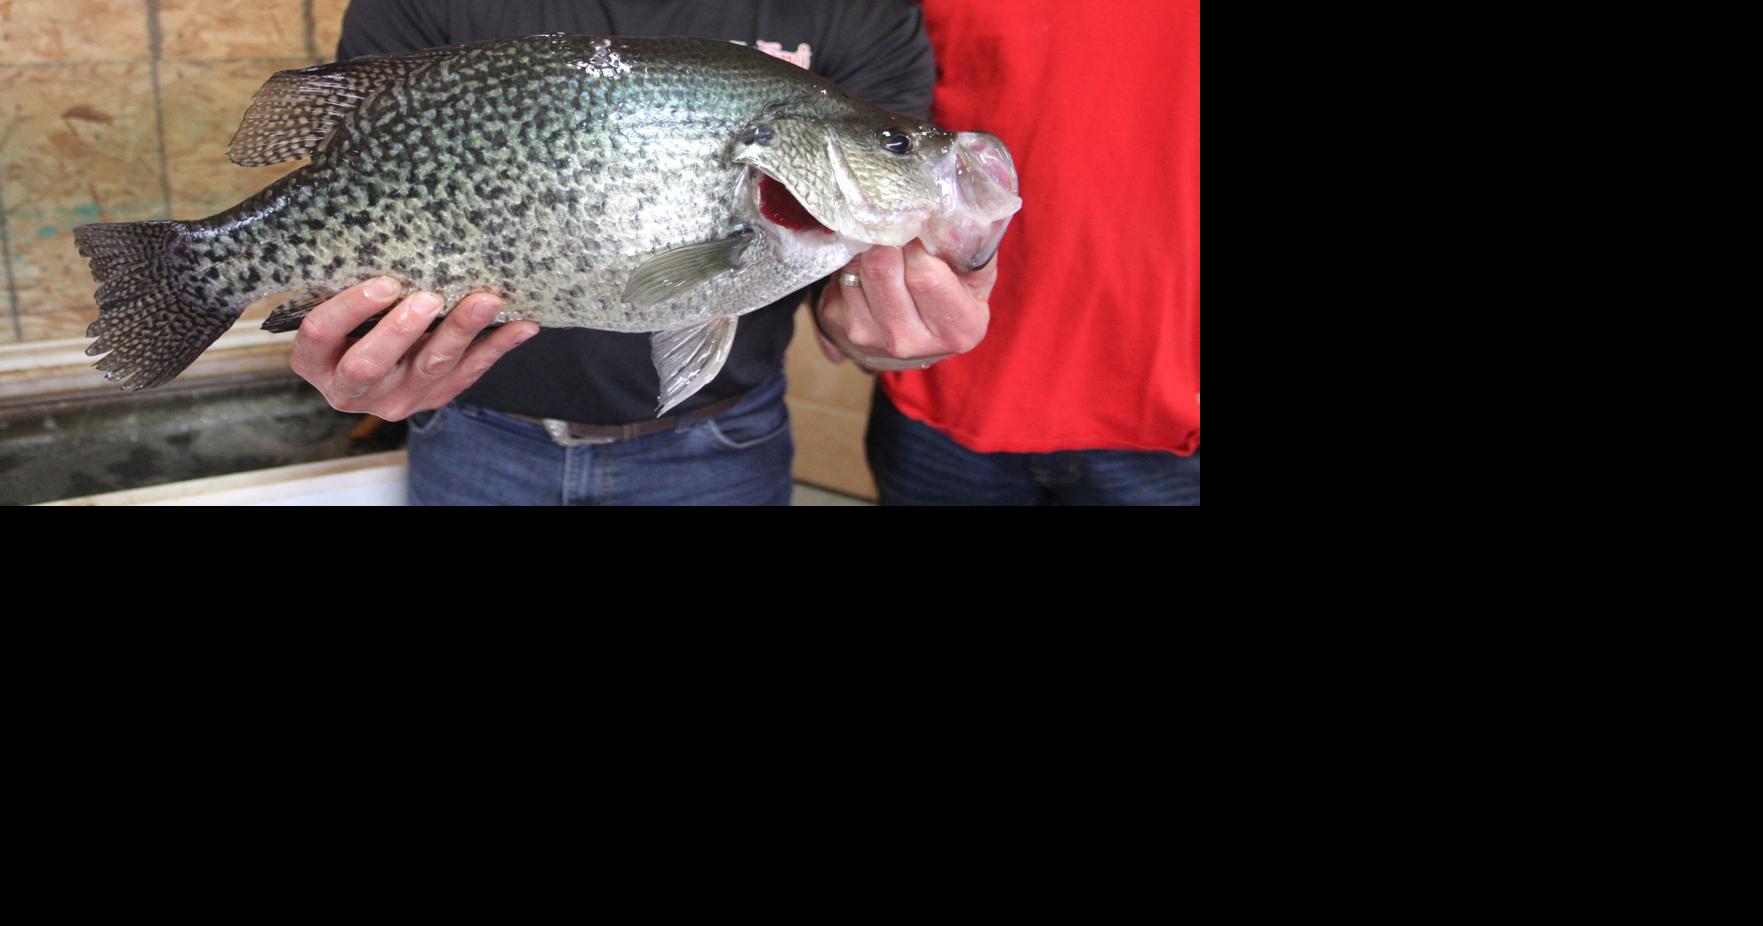 State record crappie caught at Kinkaid Lake